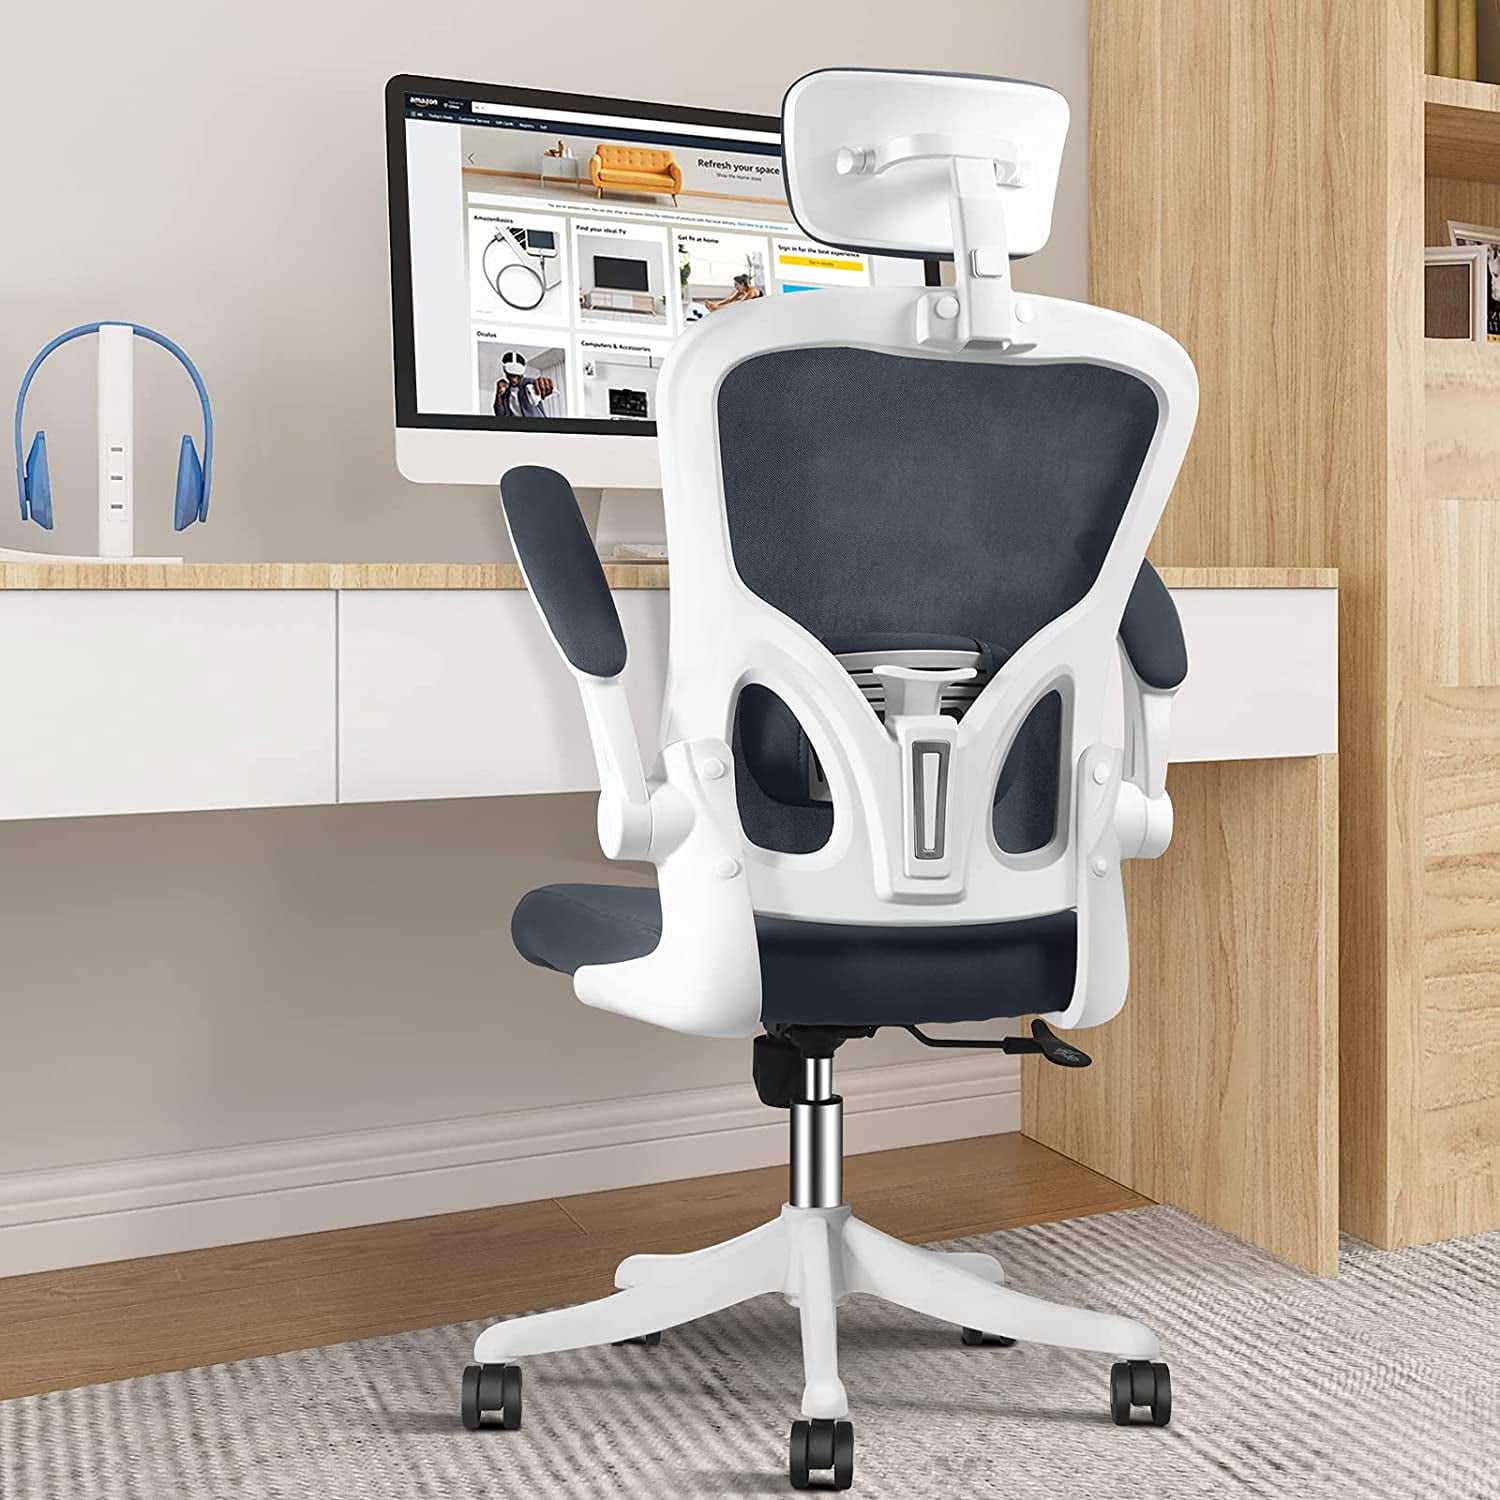 Details about   Office Mesh Chair Ergonomic Computer Desk Chair Height Adjustable Wheels Armrest 